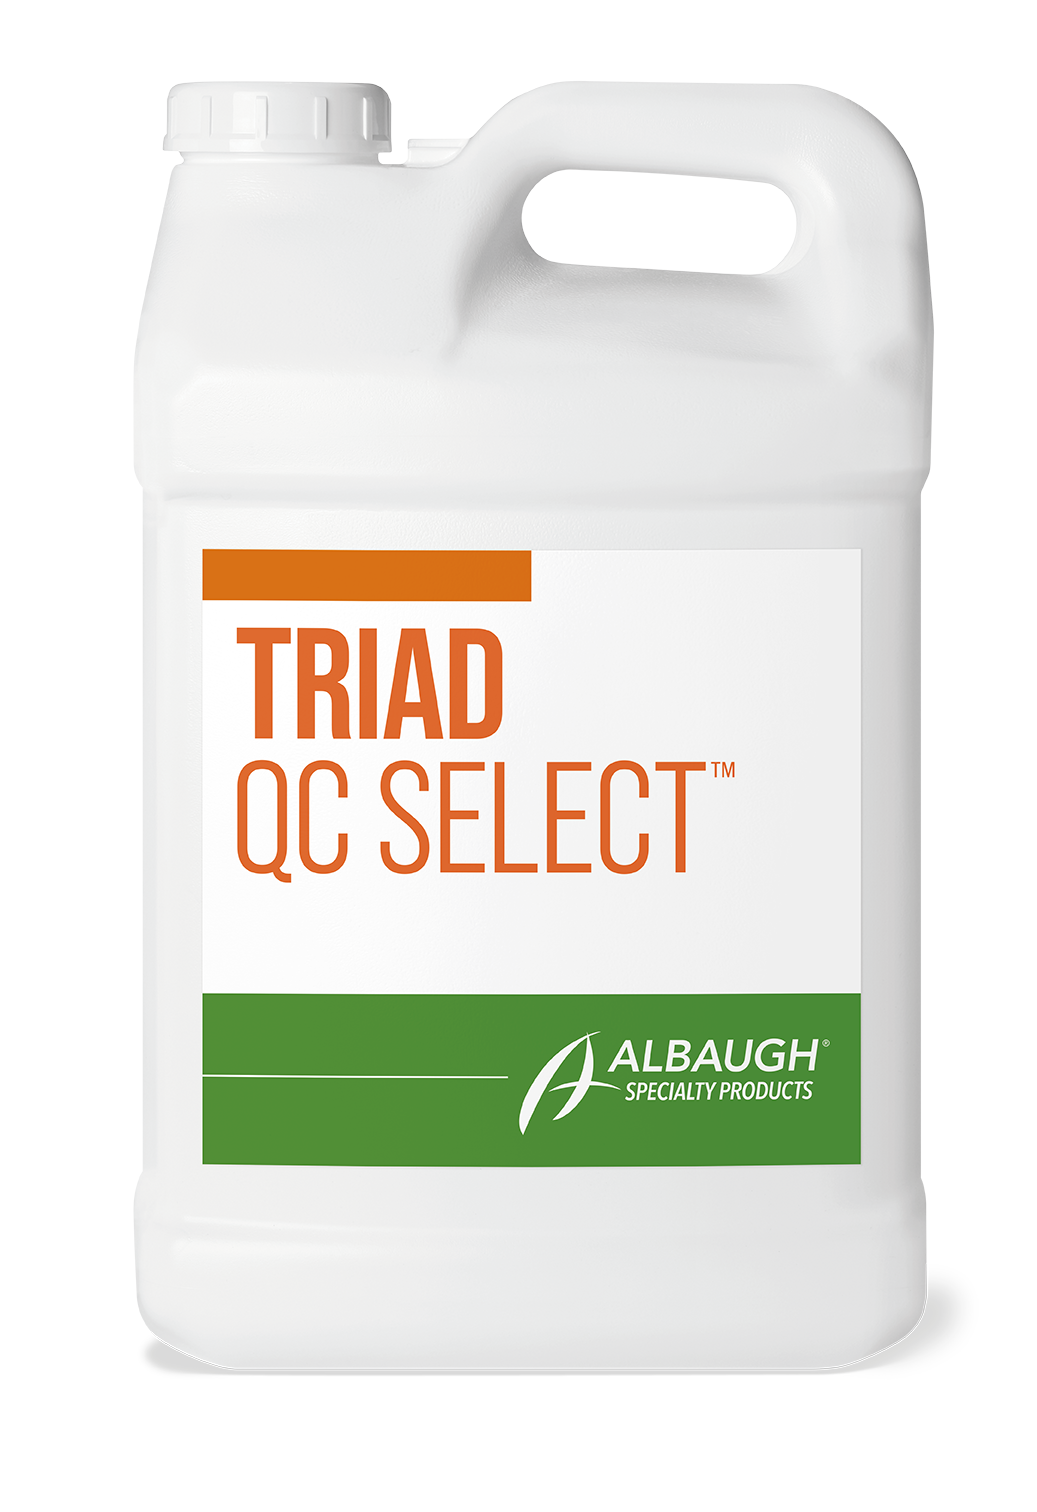 Triad QC Select™